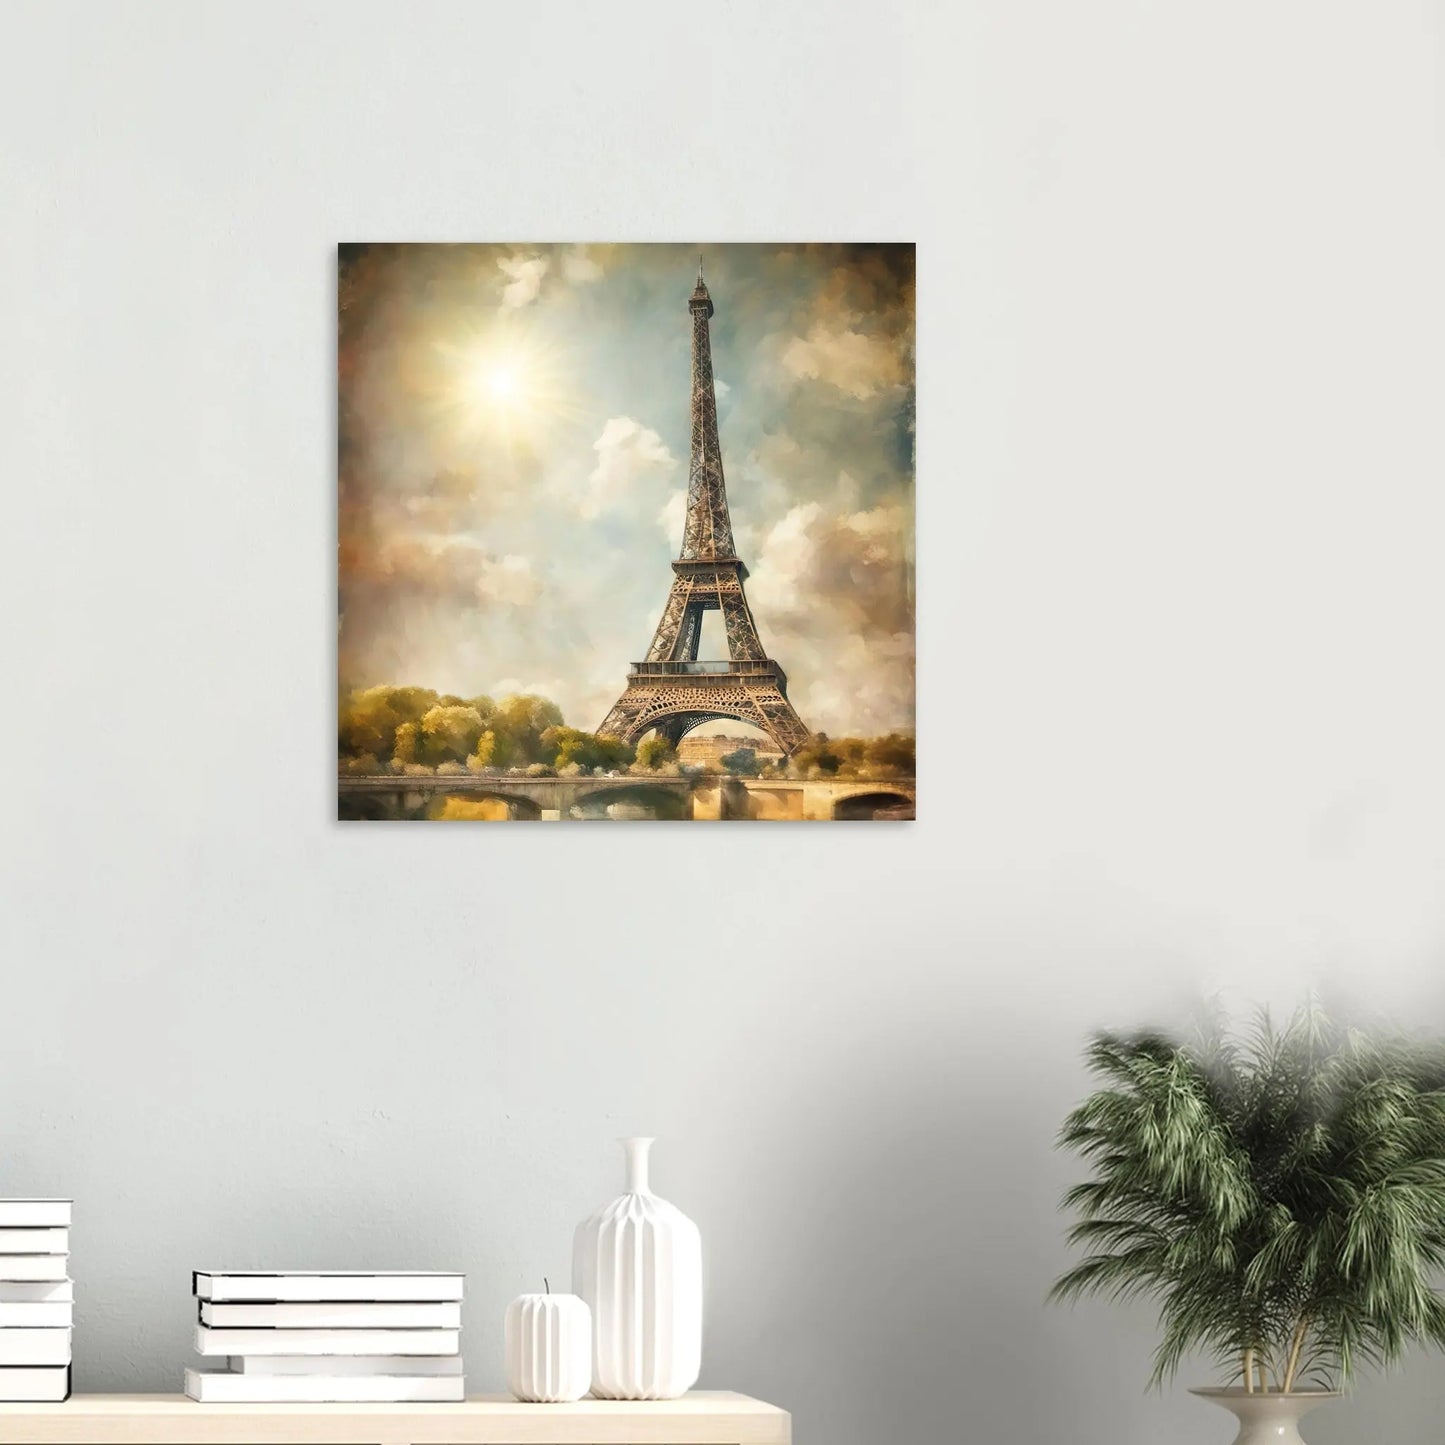 Aluminiumdruck - Eiffelturm - Malerischer Stil, KI-Kunst RolConArt